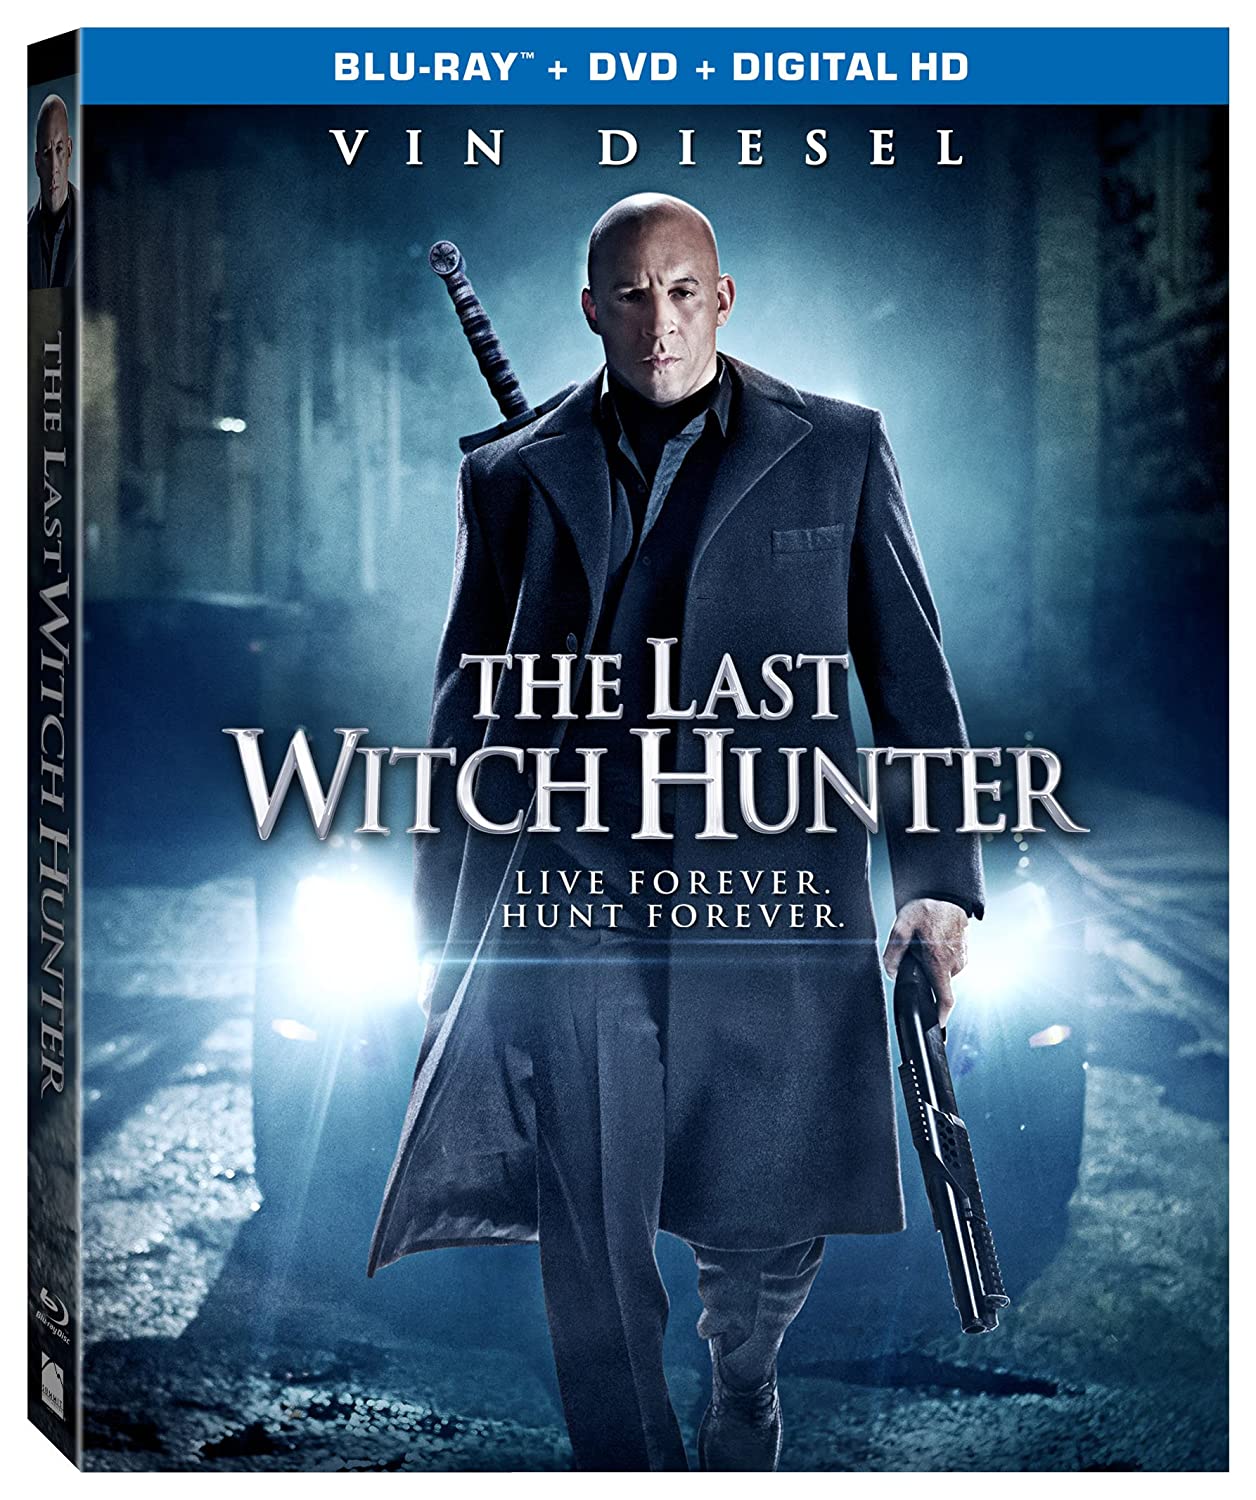 Stiahni si HD Filmy Posledni lovec carodejnic / The Last Witch Hunter (2015)(CZ/EN)[1080pHD] = CSFD 56%